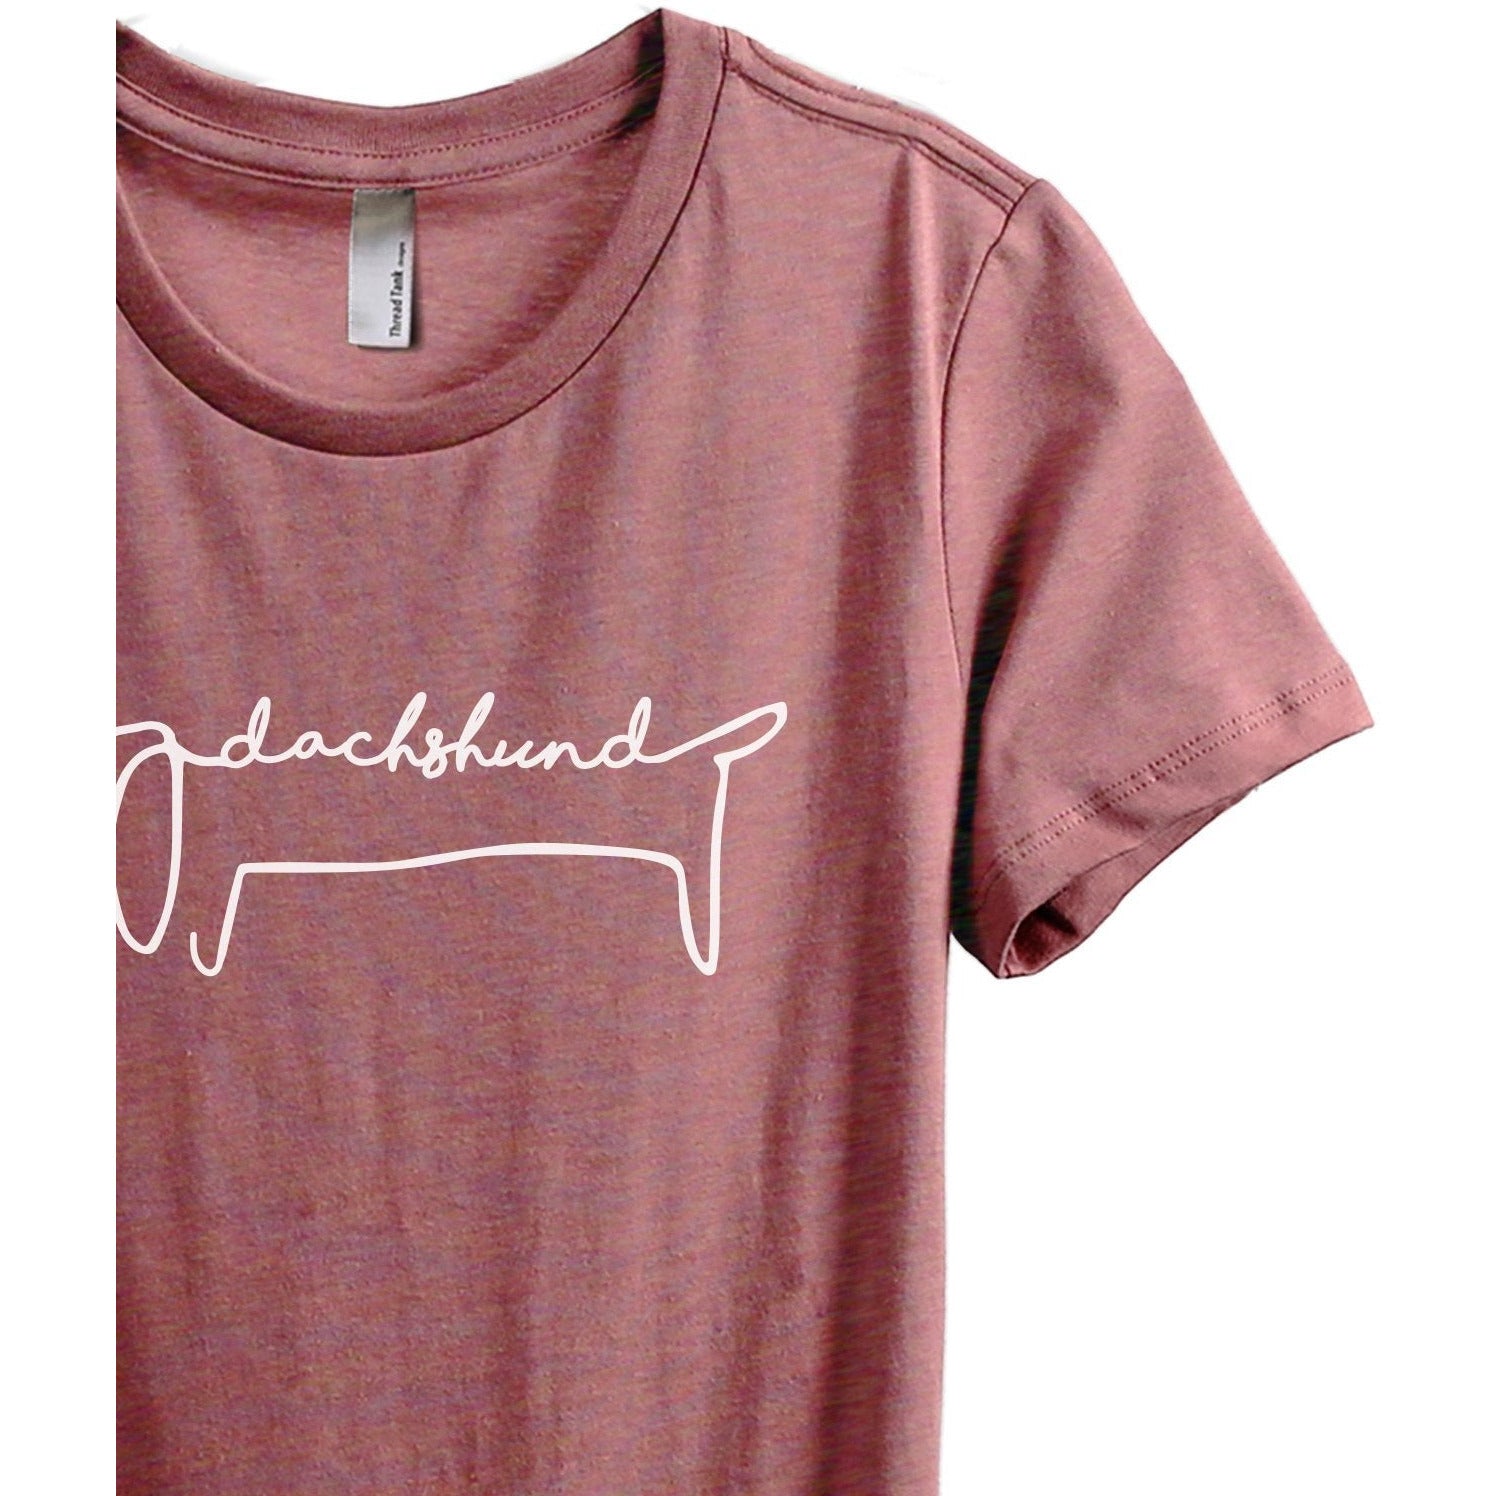 Dachshund Line Art Women's Relaxed Crewneck T-Shirt Top Tee Heather Rouge